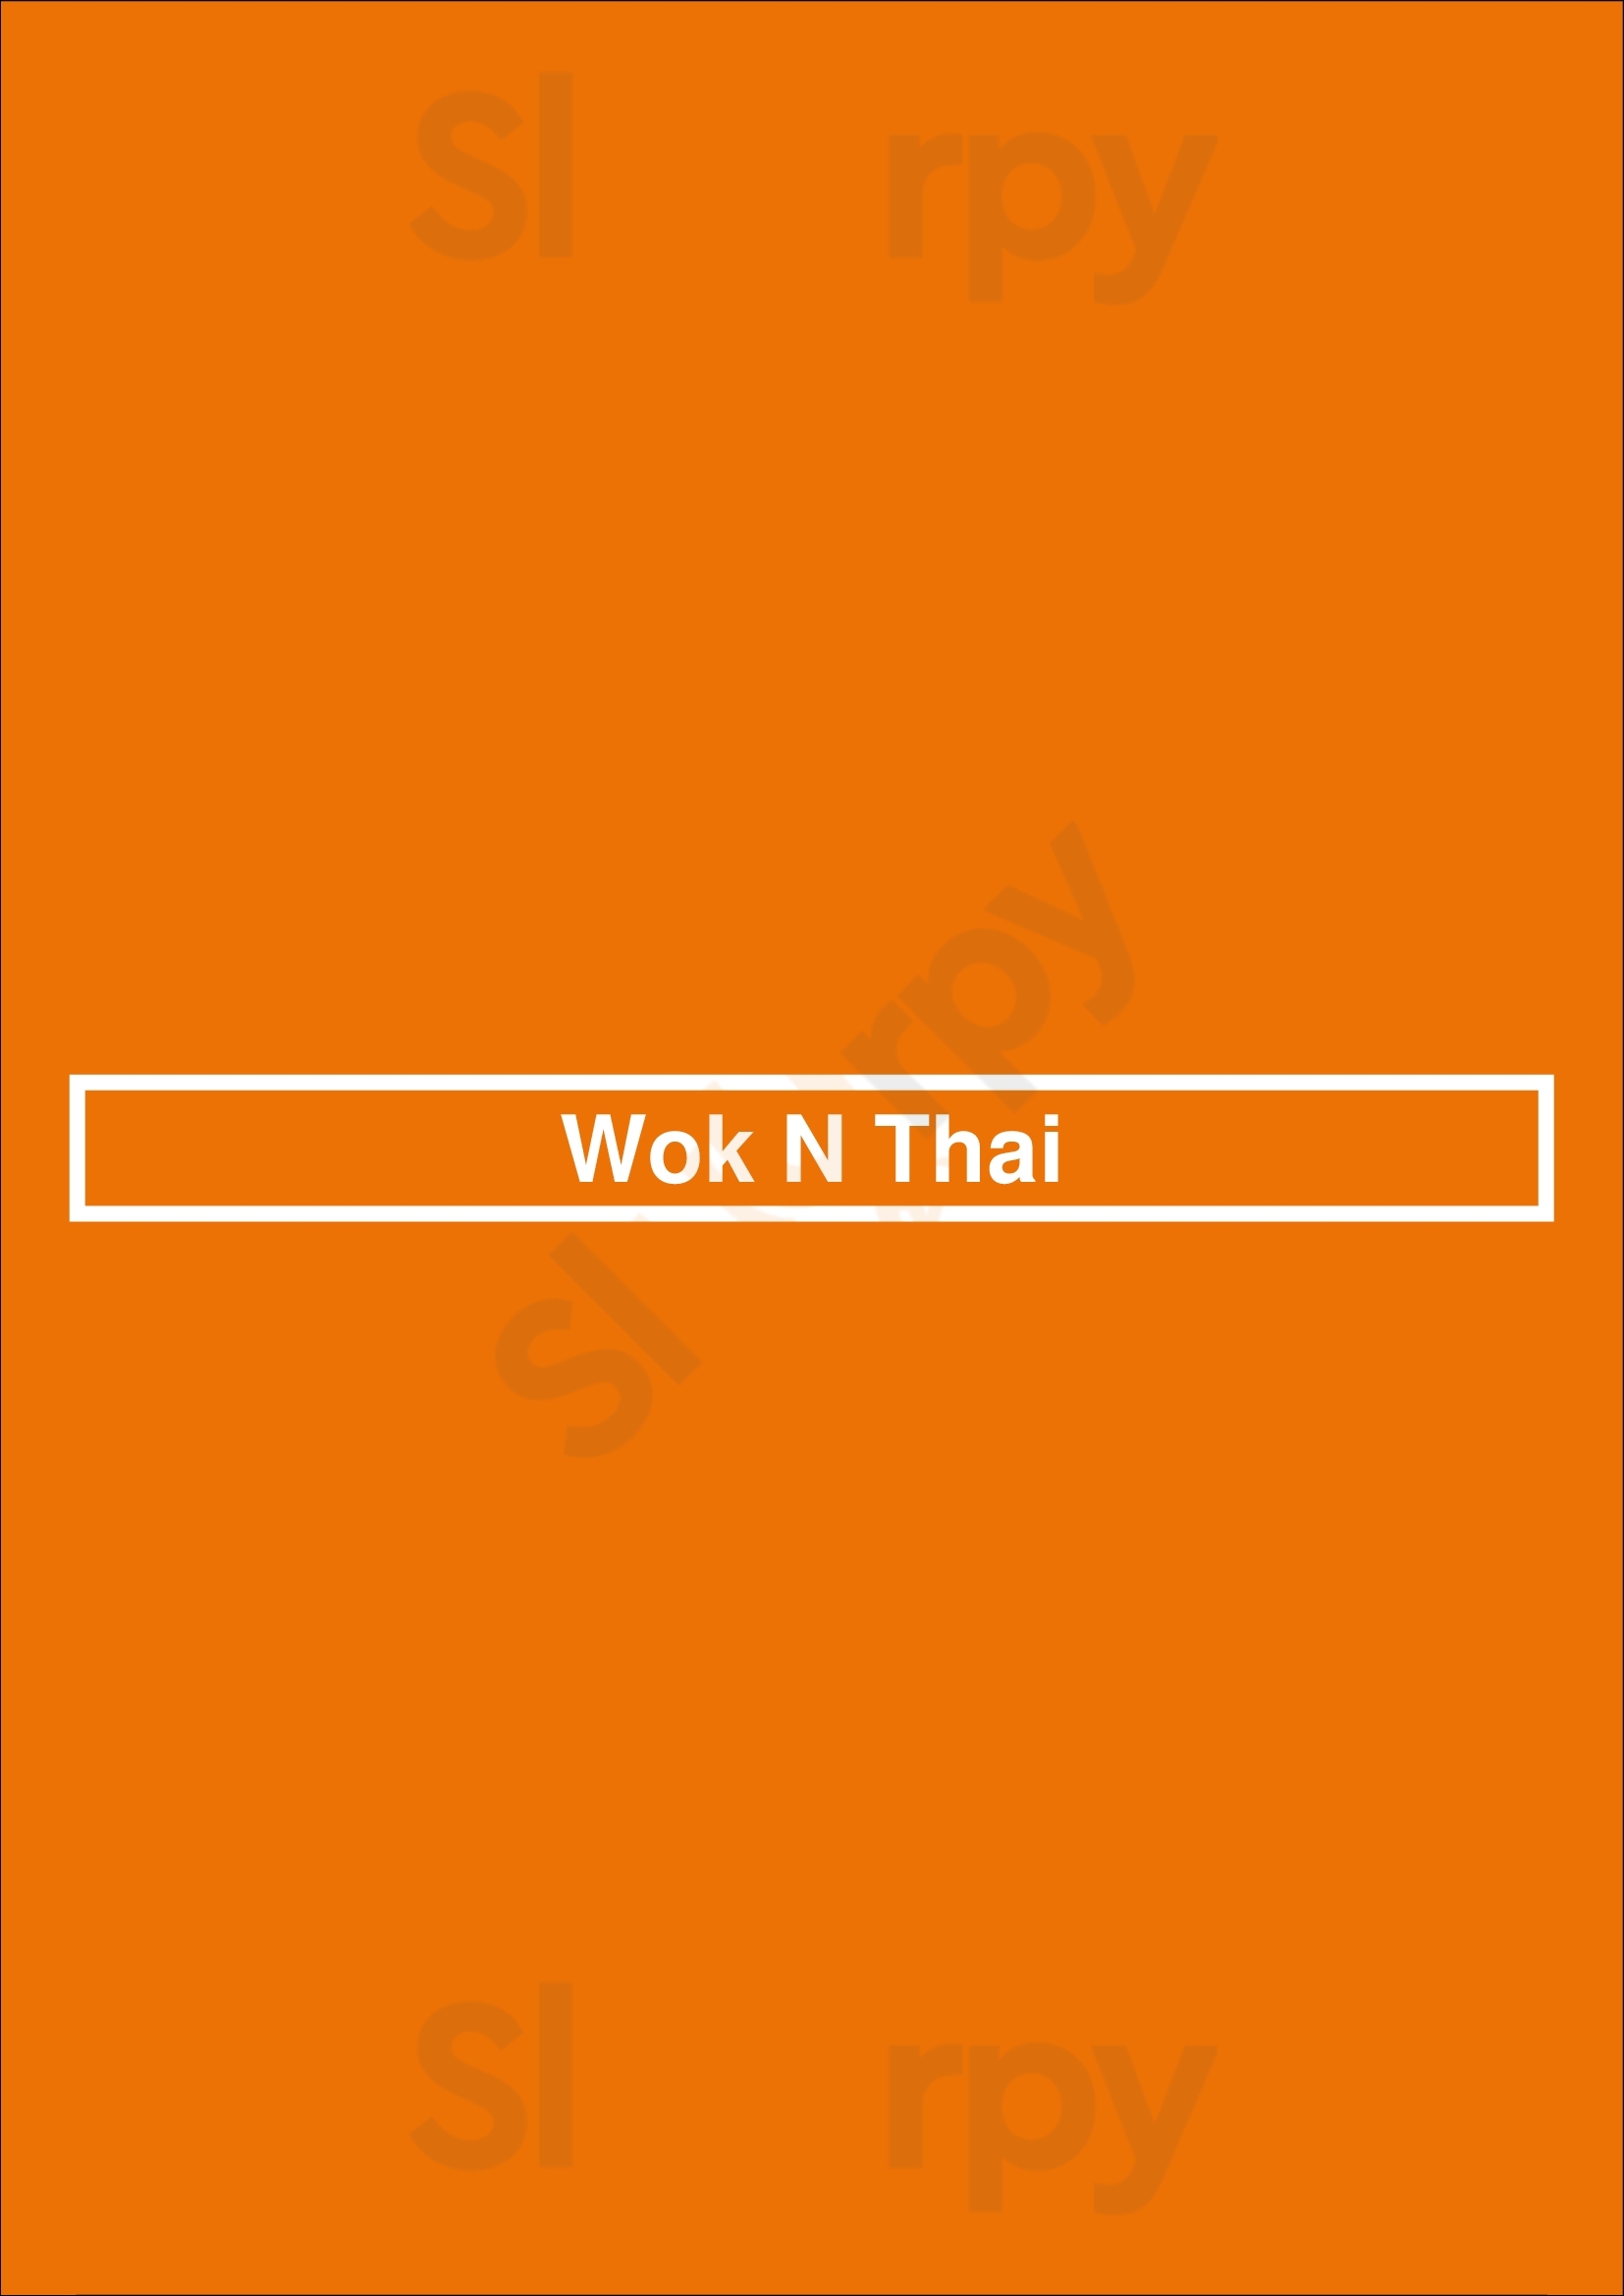 Wok N Thai London Menu - 1